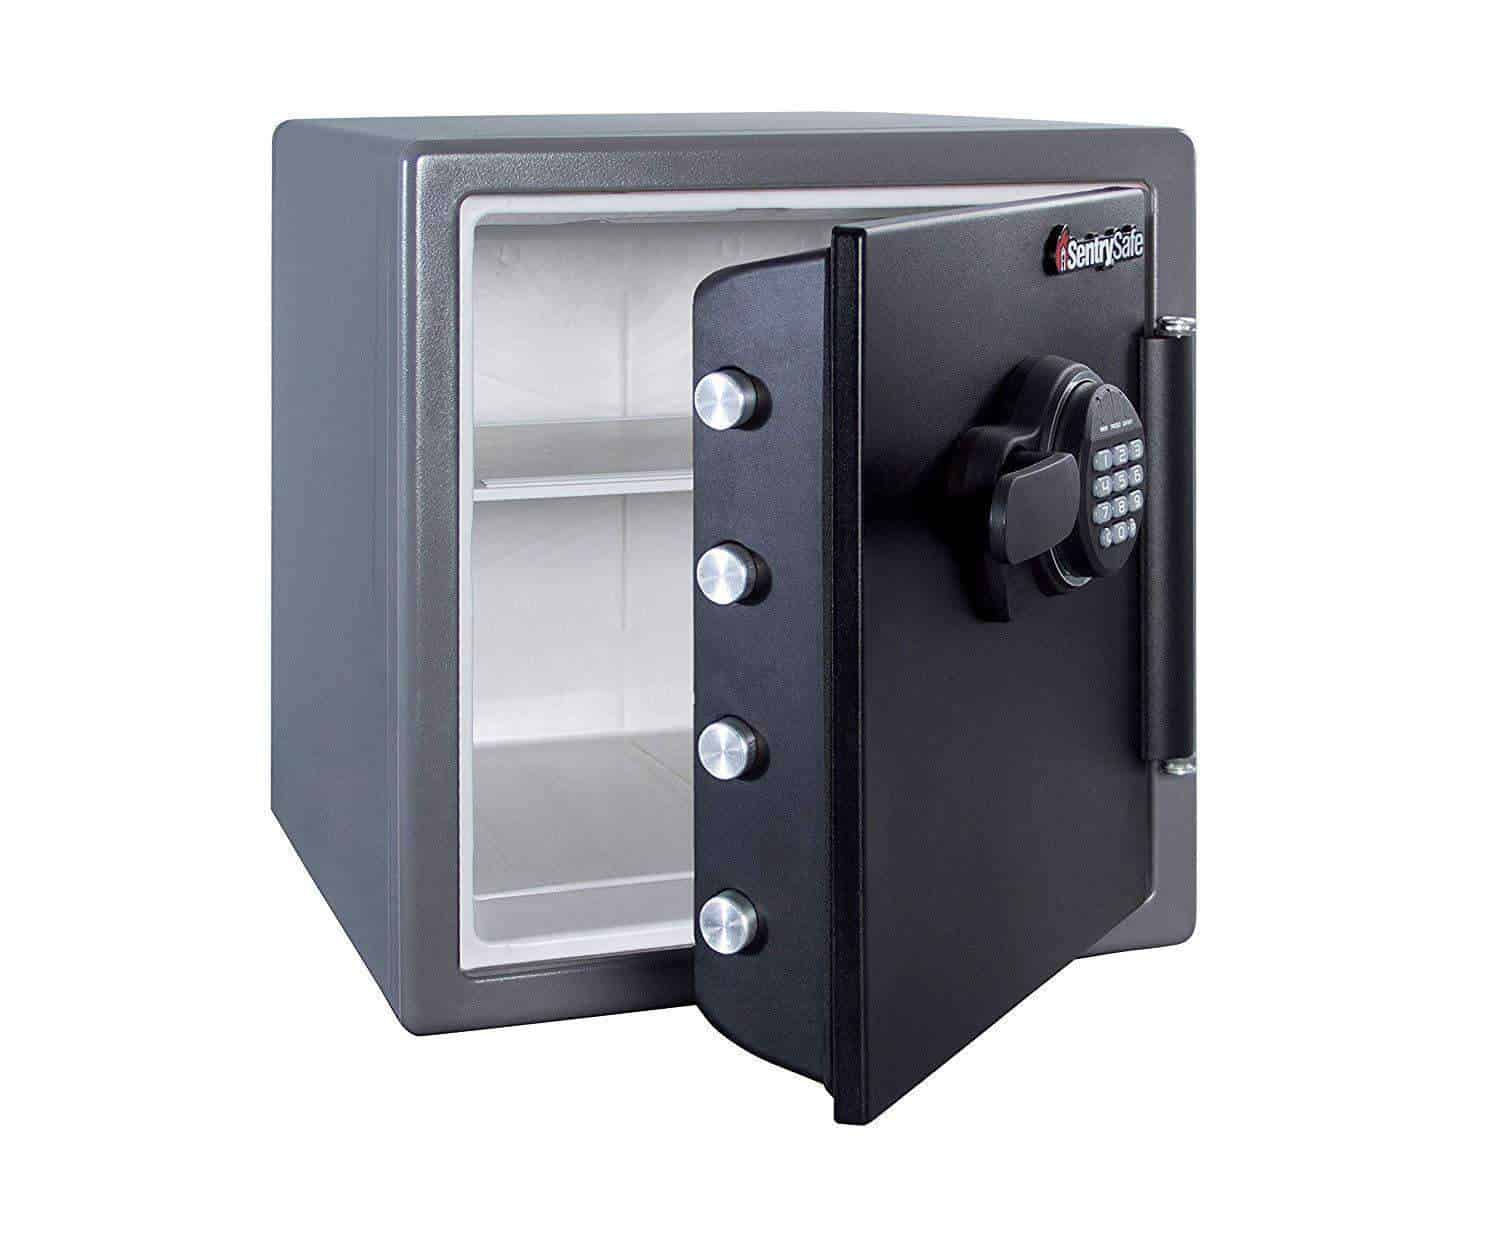 Sentry Safe Fire & Water Resistant Electronic Lock Safe with 1hr Resistance - Senior.com Fires Safes